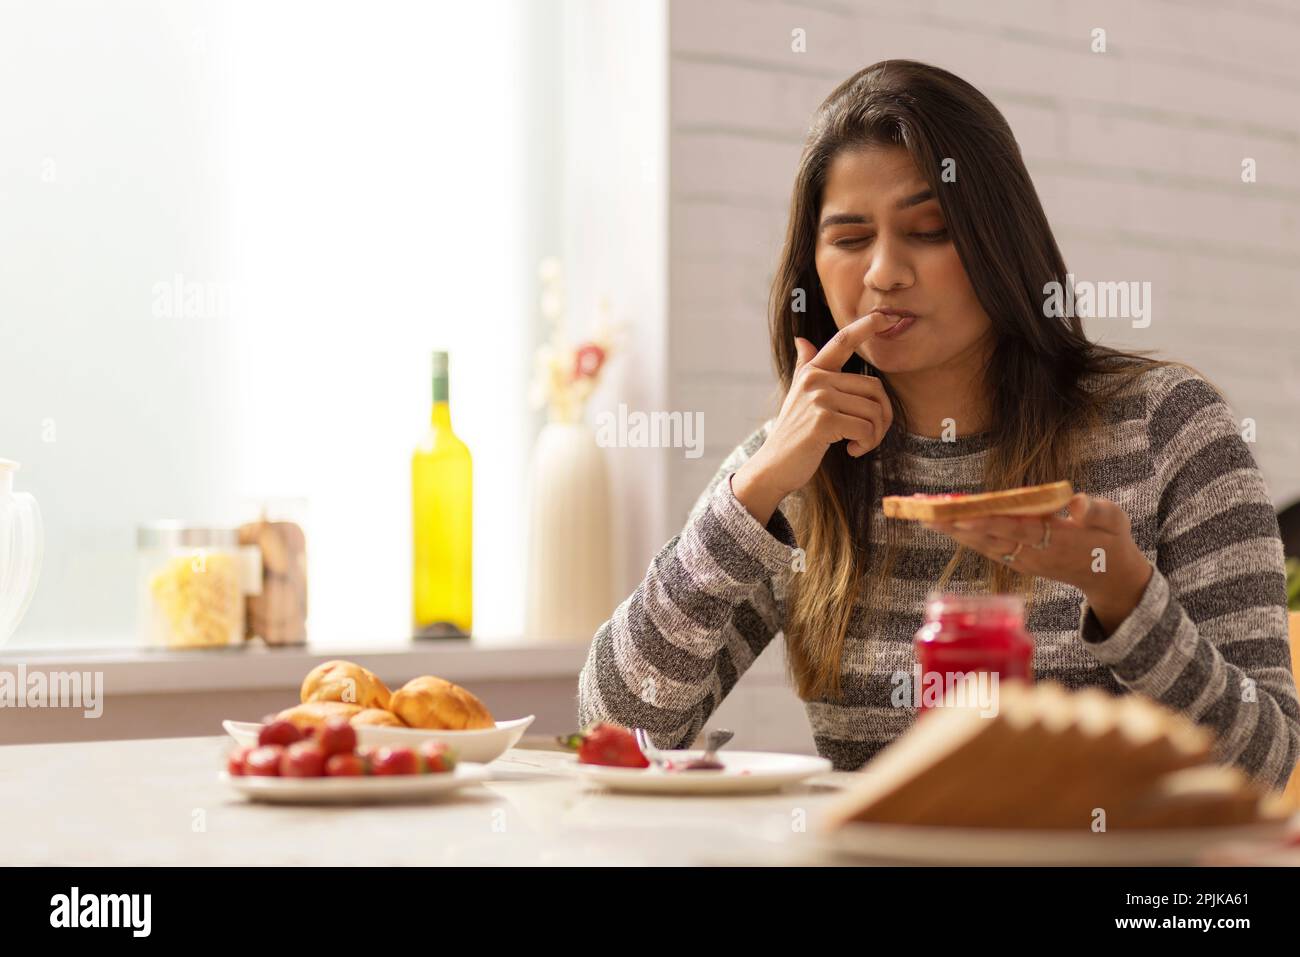 Woman enjoying her breakfast in kitchen Stock Photo